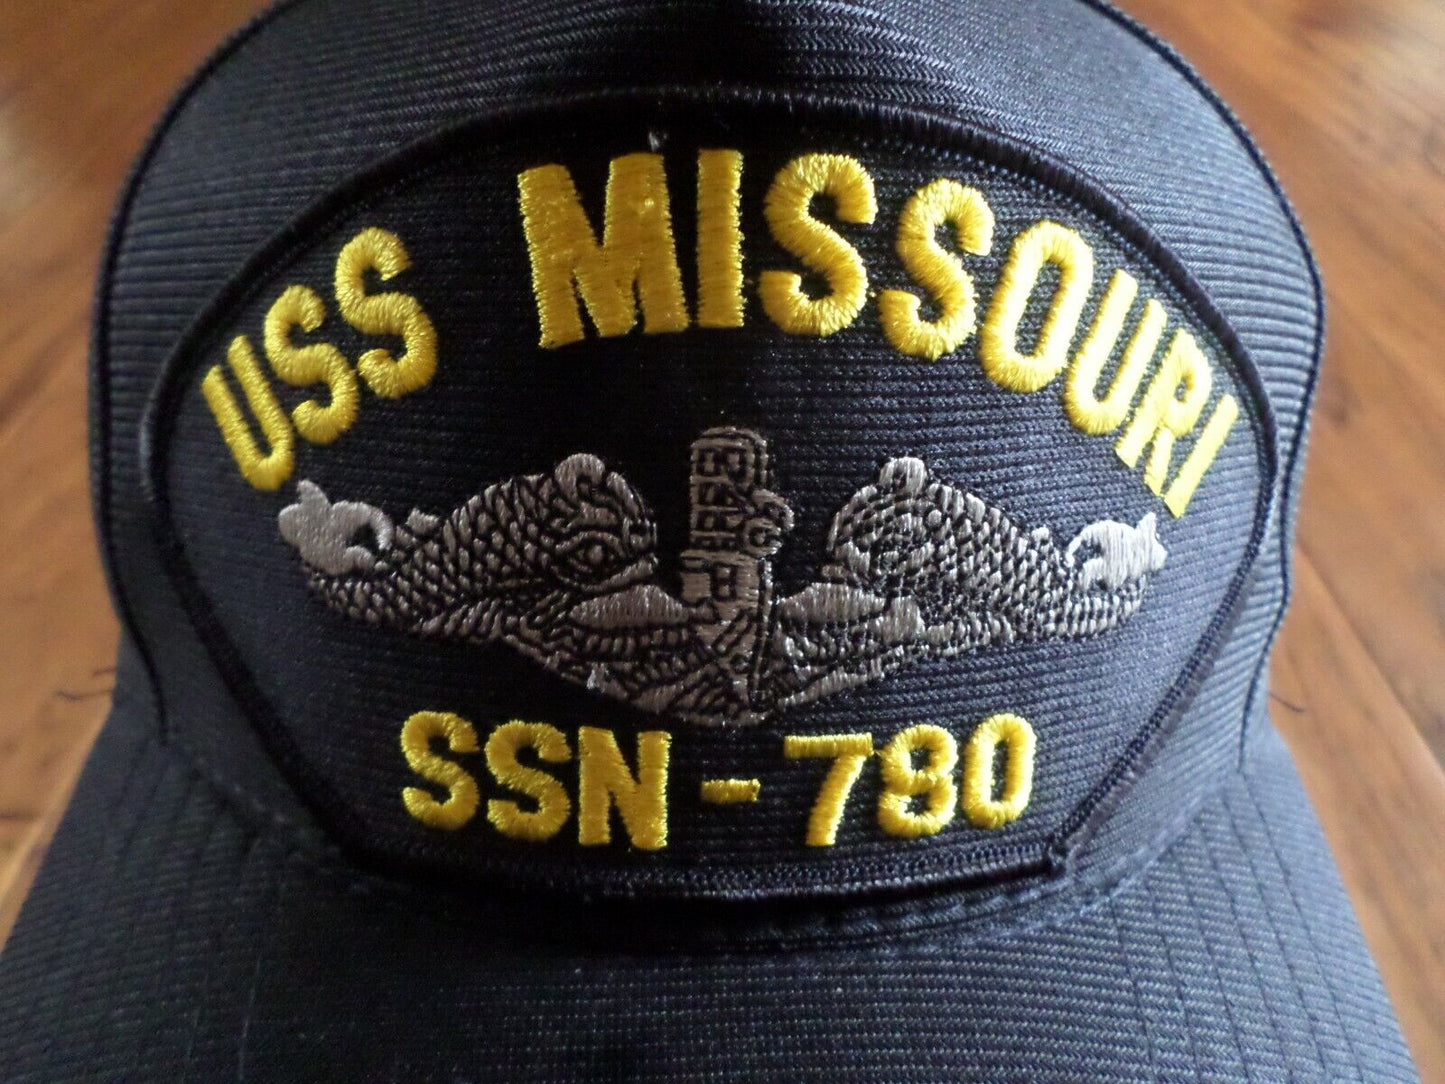 USS MISSOURI SSN 780 NAVY SUBMARINE HAT U.S MILITARY OFFICIAL BALL CAP USA MADE